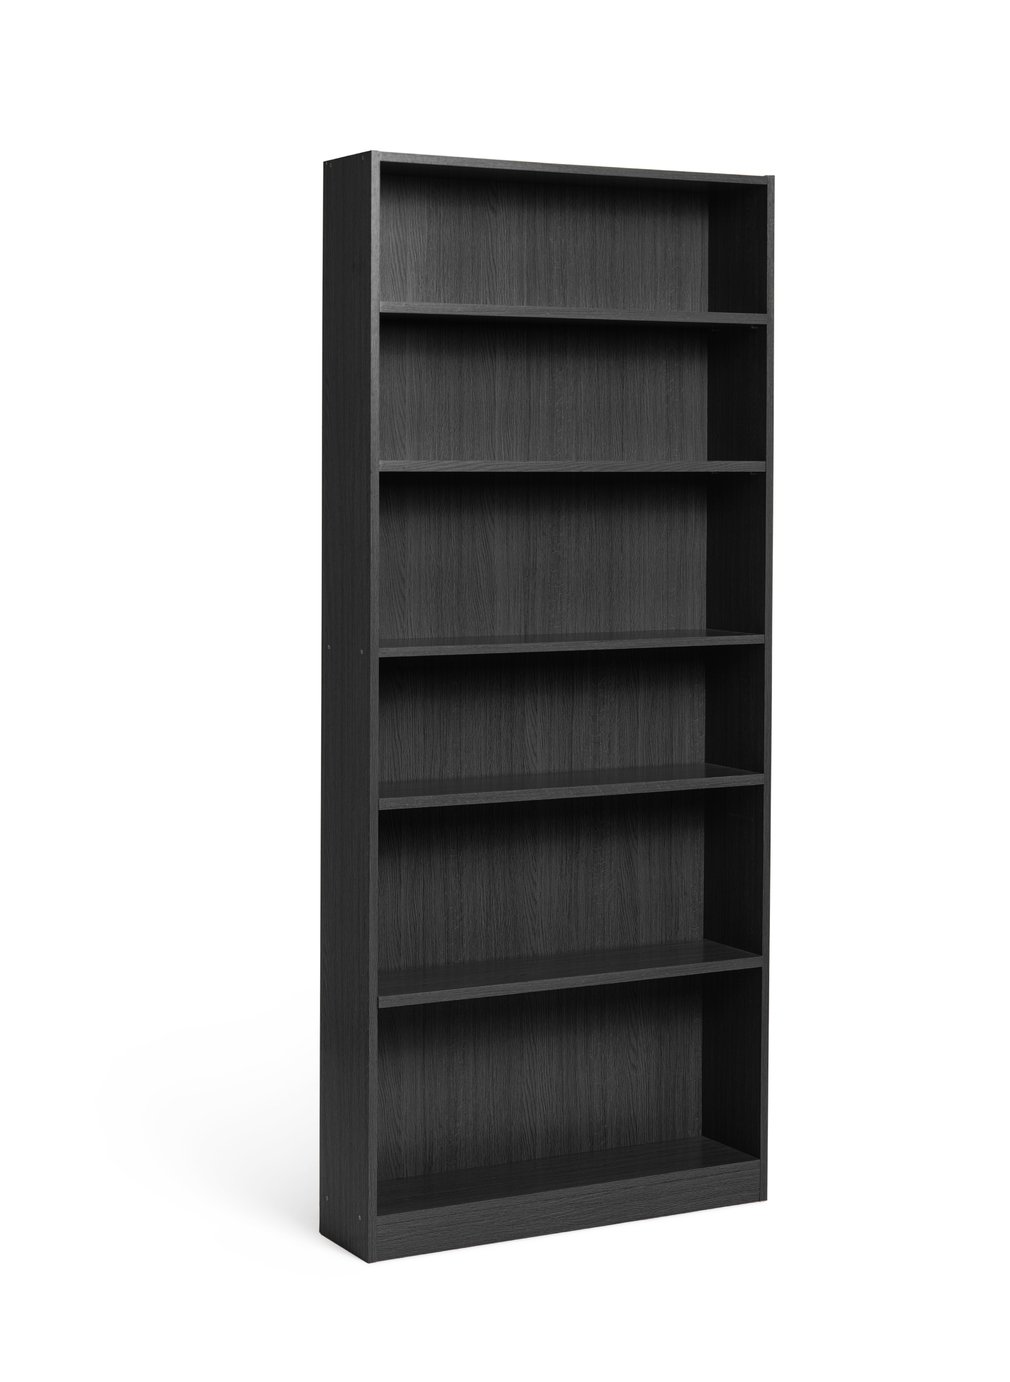 Argos Home Maine Bookcase - Black